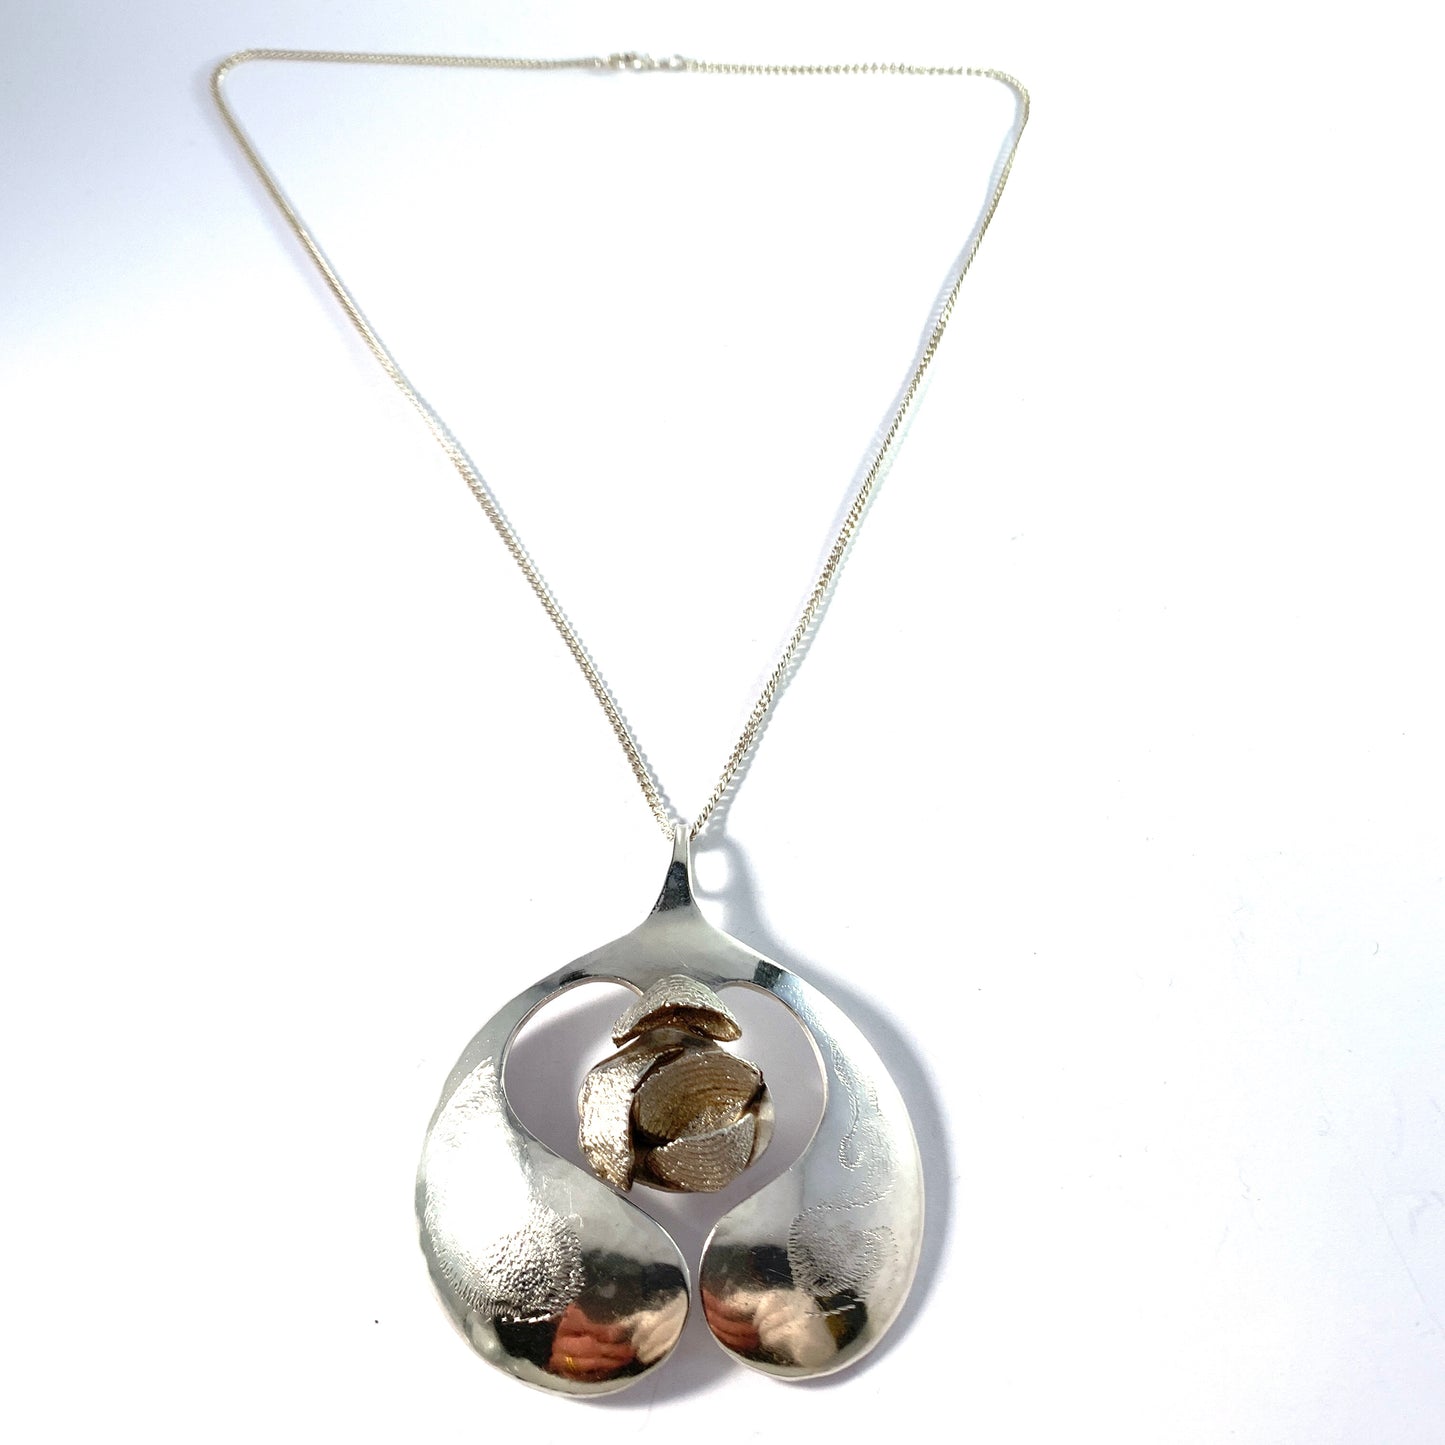 Ibe Dahlqust, Sweden. Vintage Sterling Silver Large Pendant Necklace. Signed.